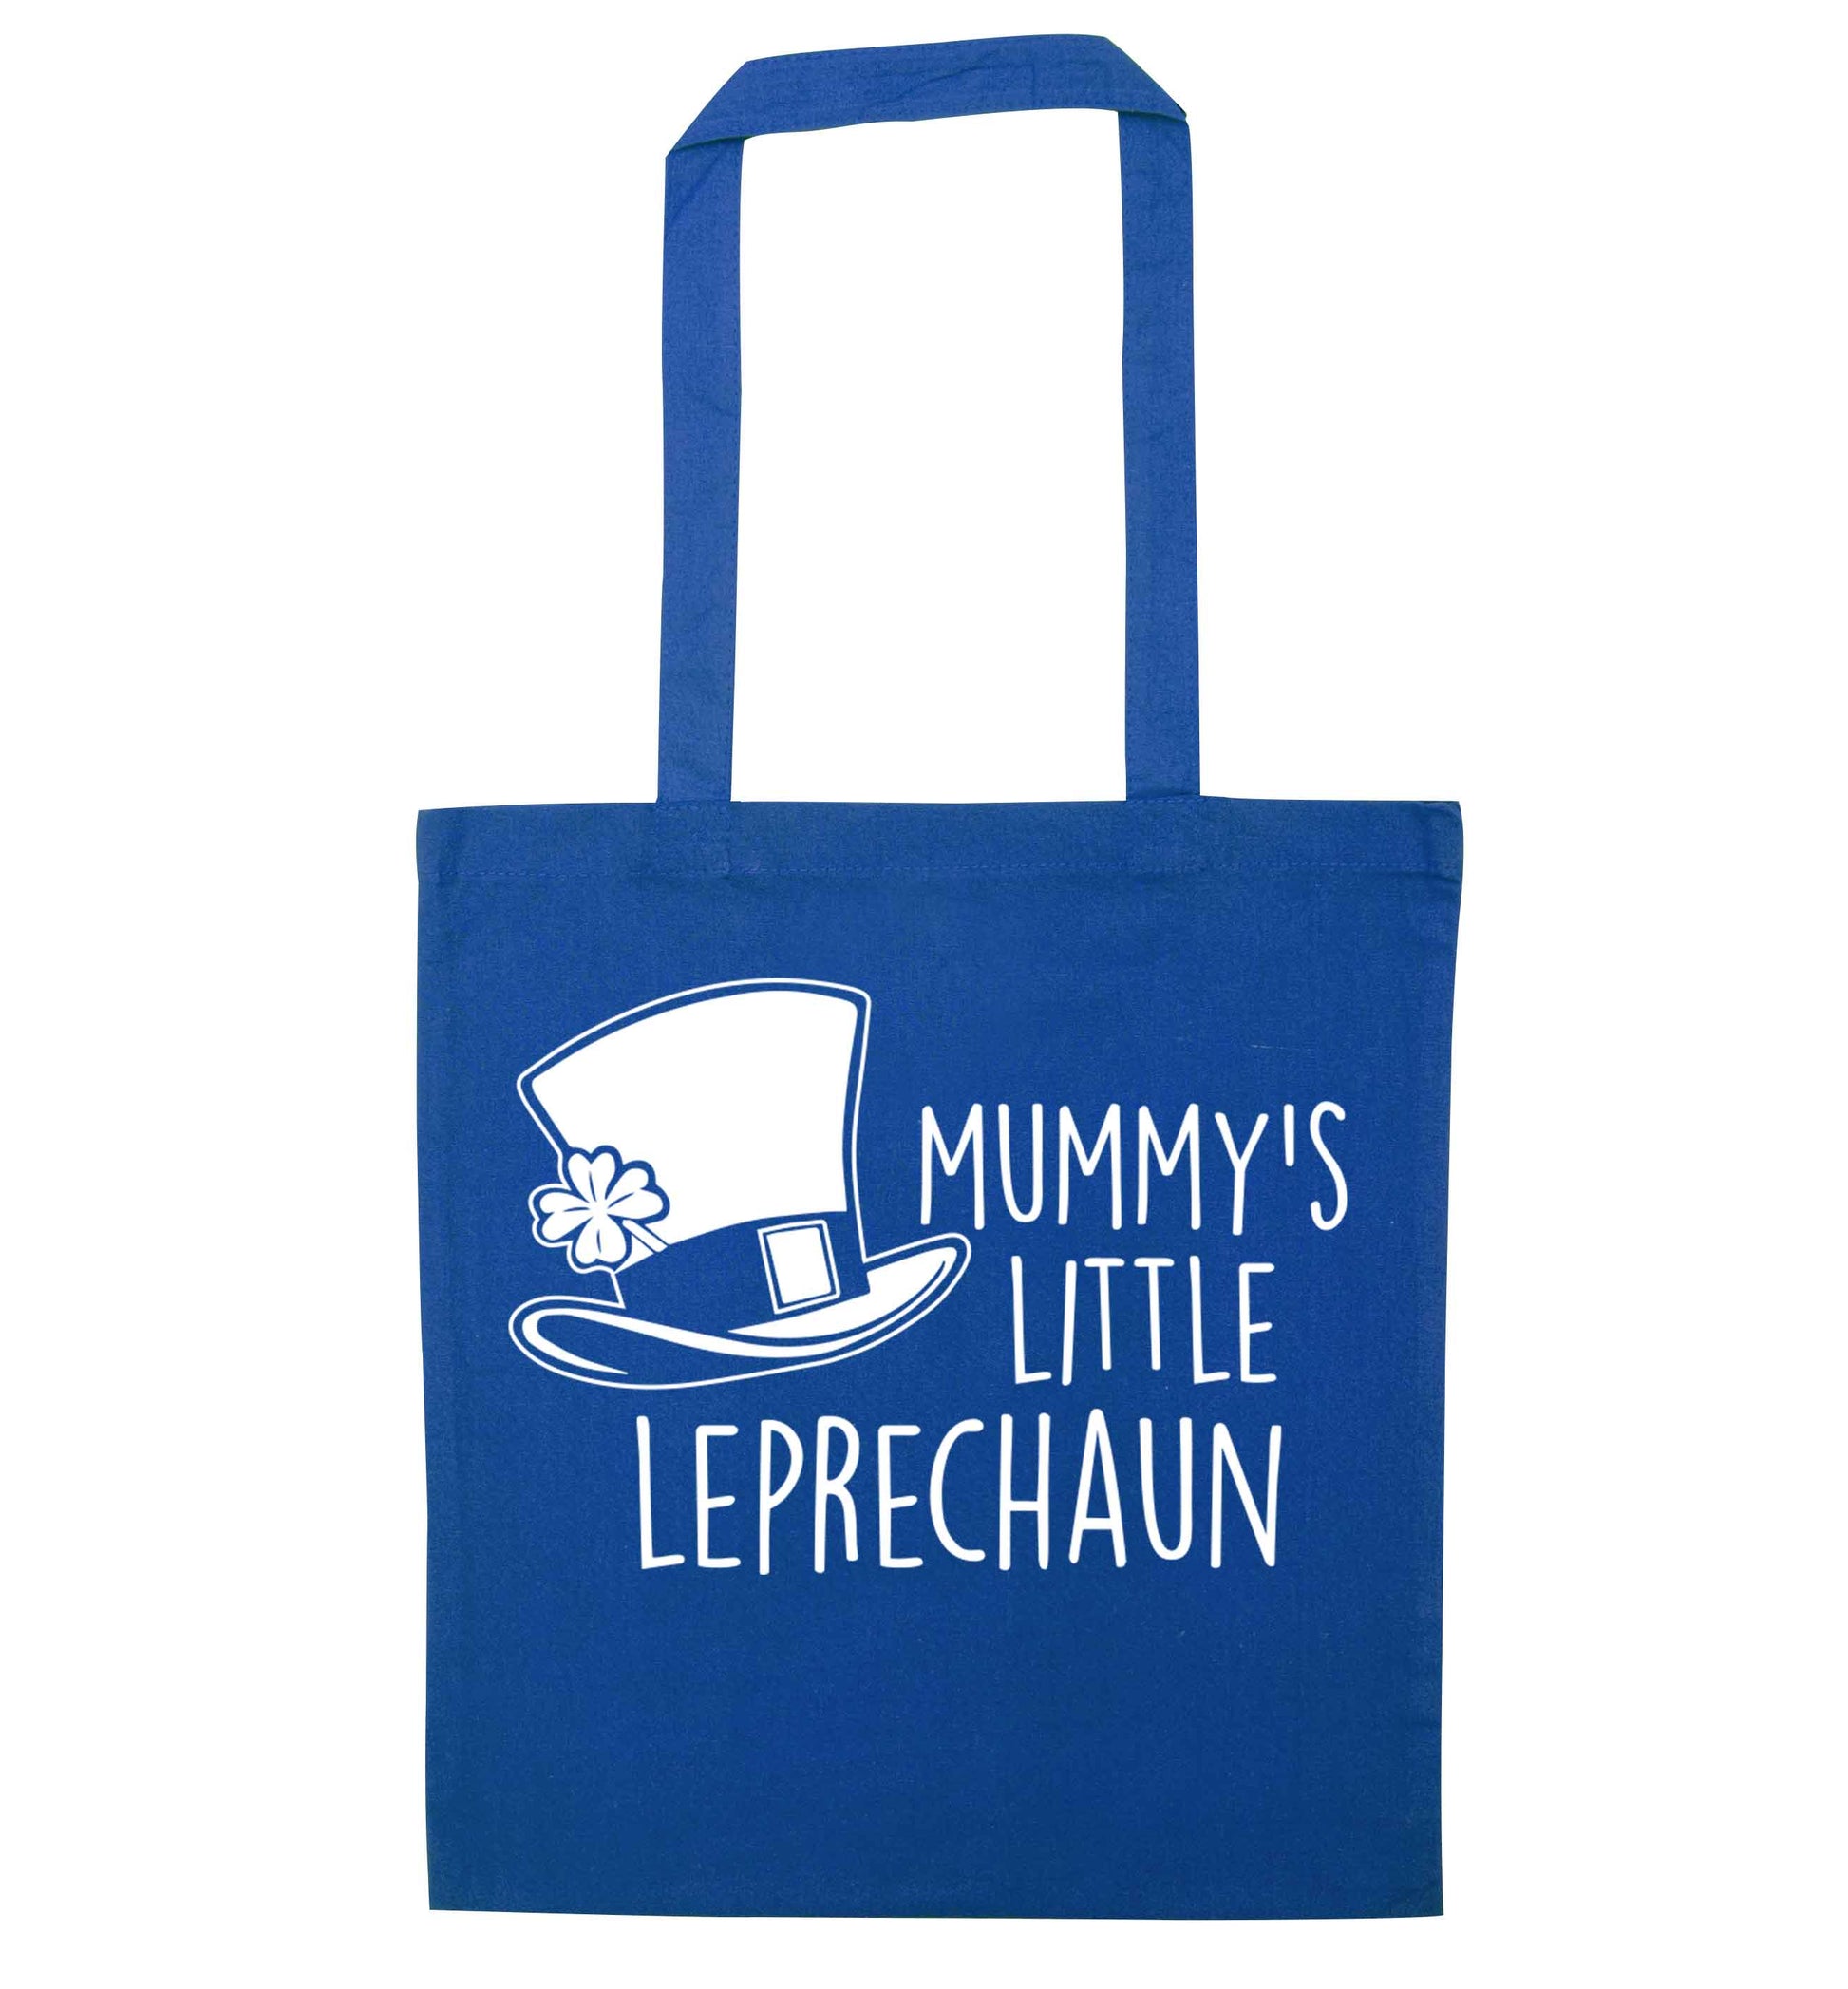 Mummy's little leprechaun blue tote bag